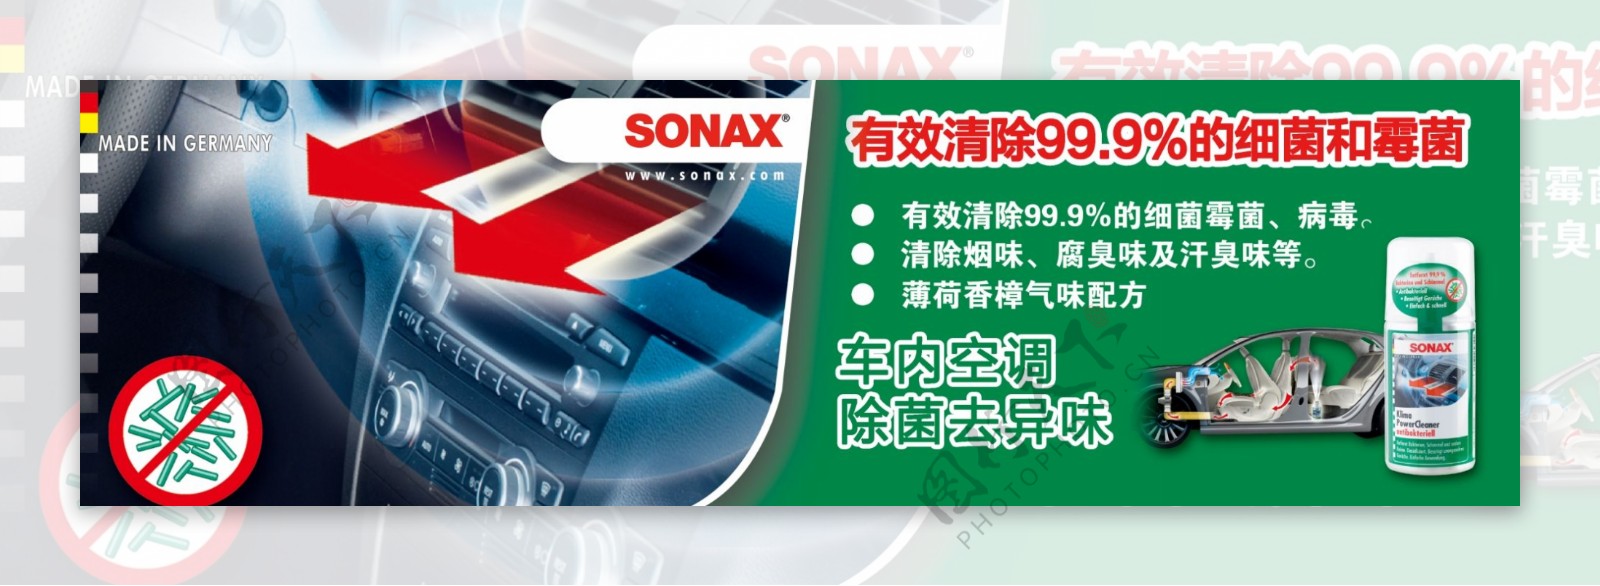 SONAX空调